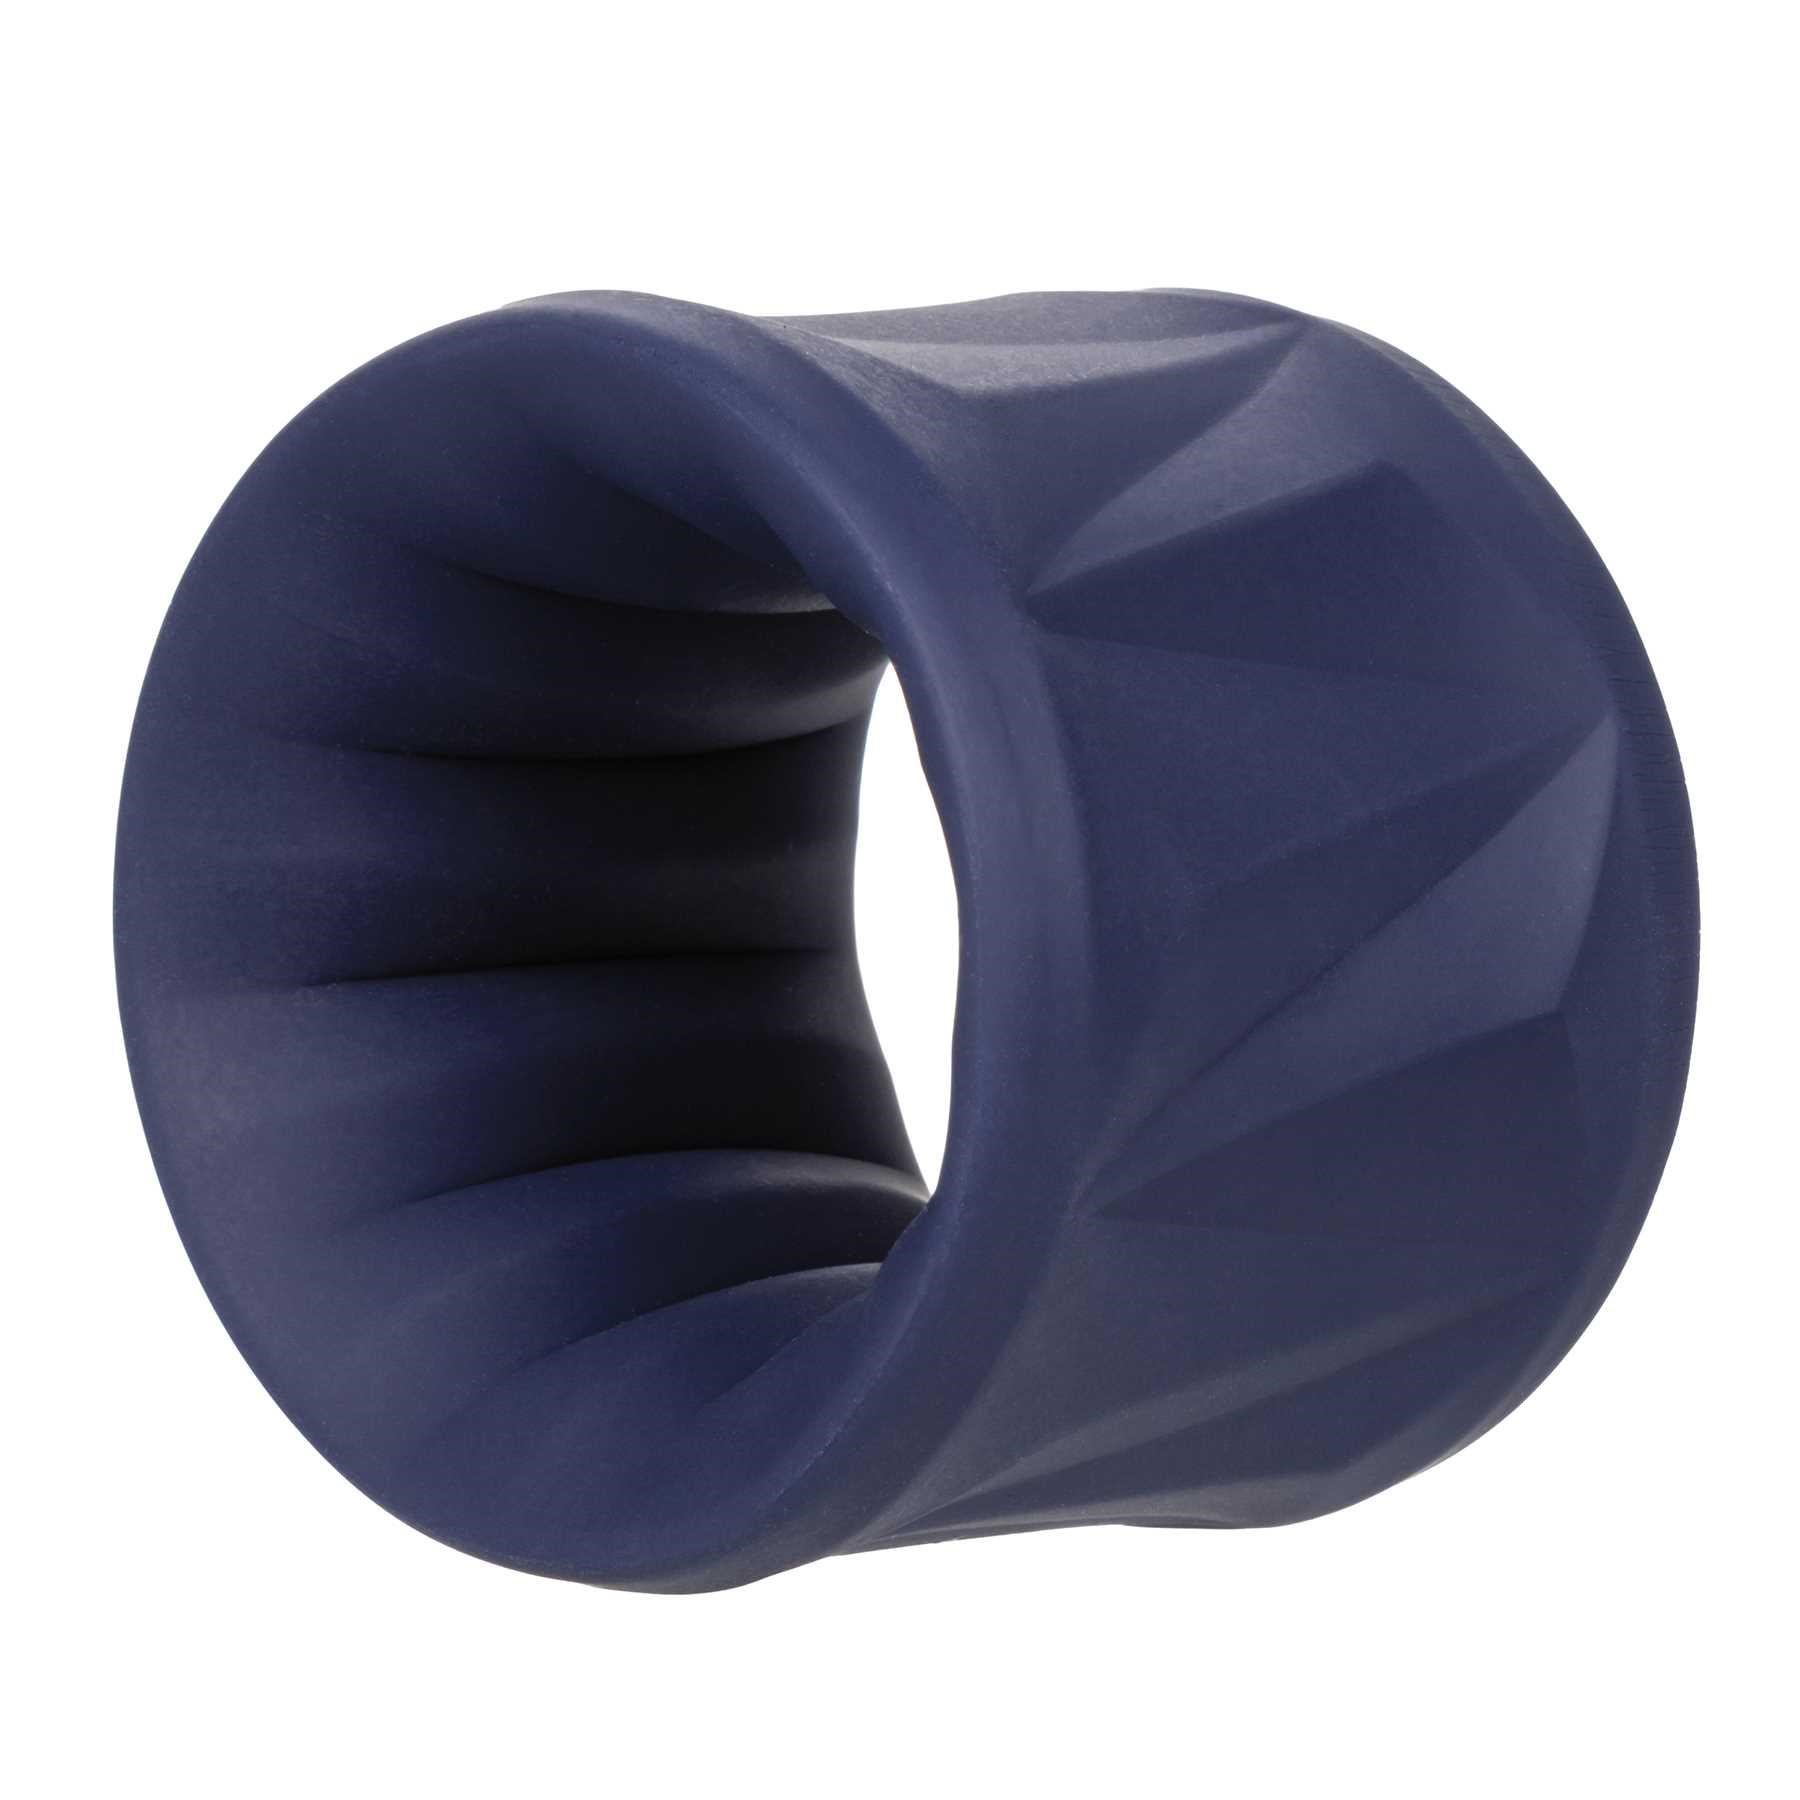 Viceroy Reverse Stamina Ring product image 6